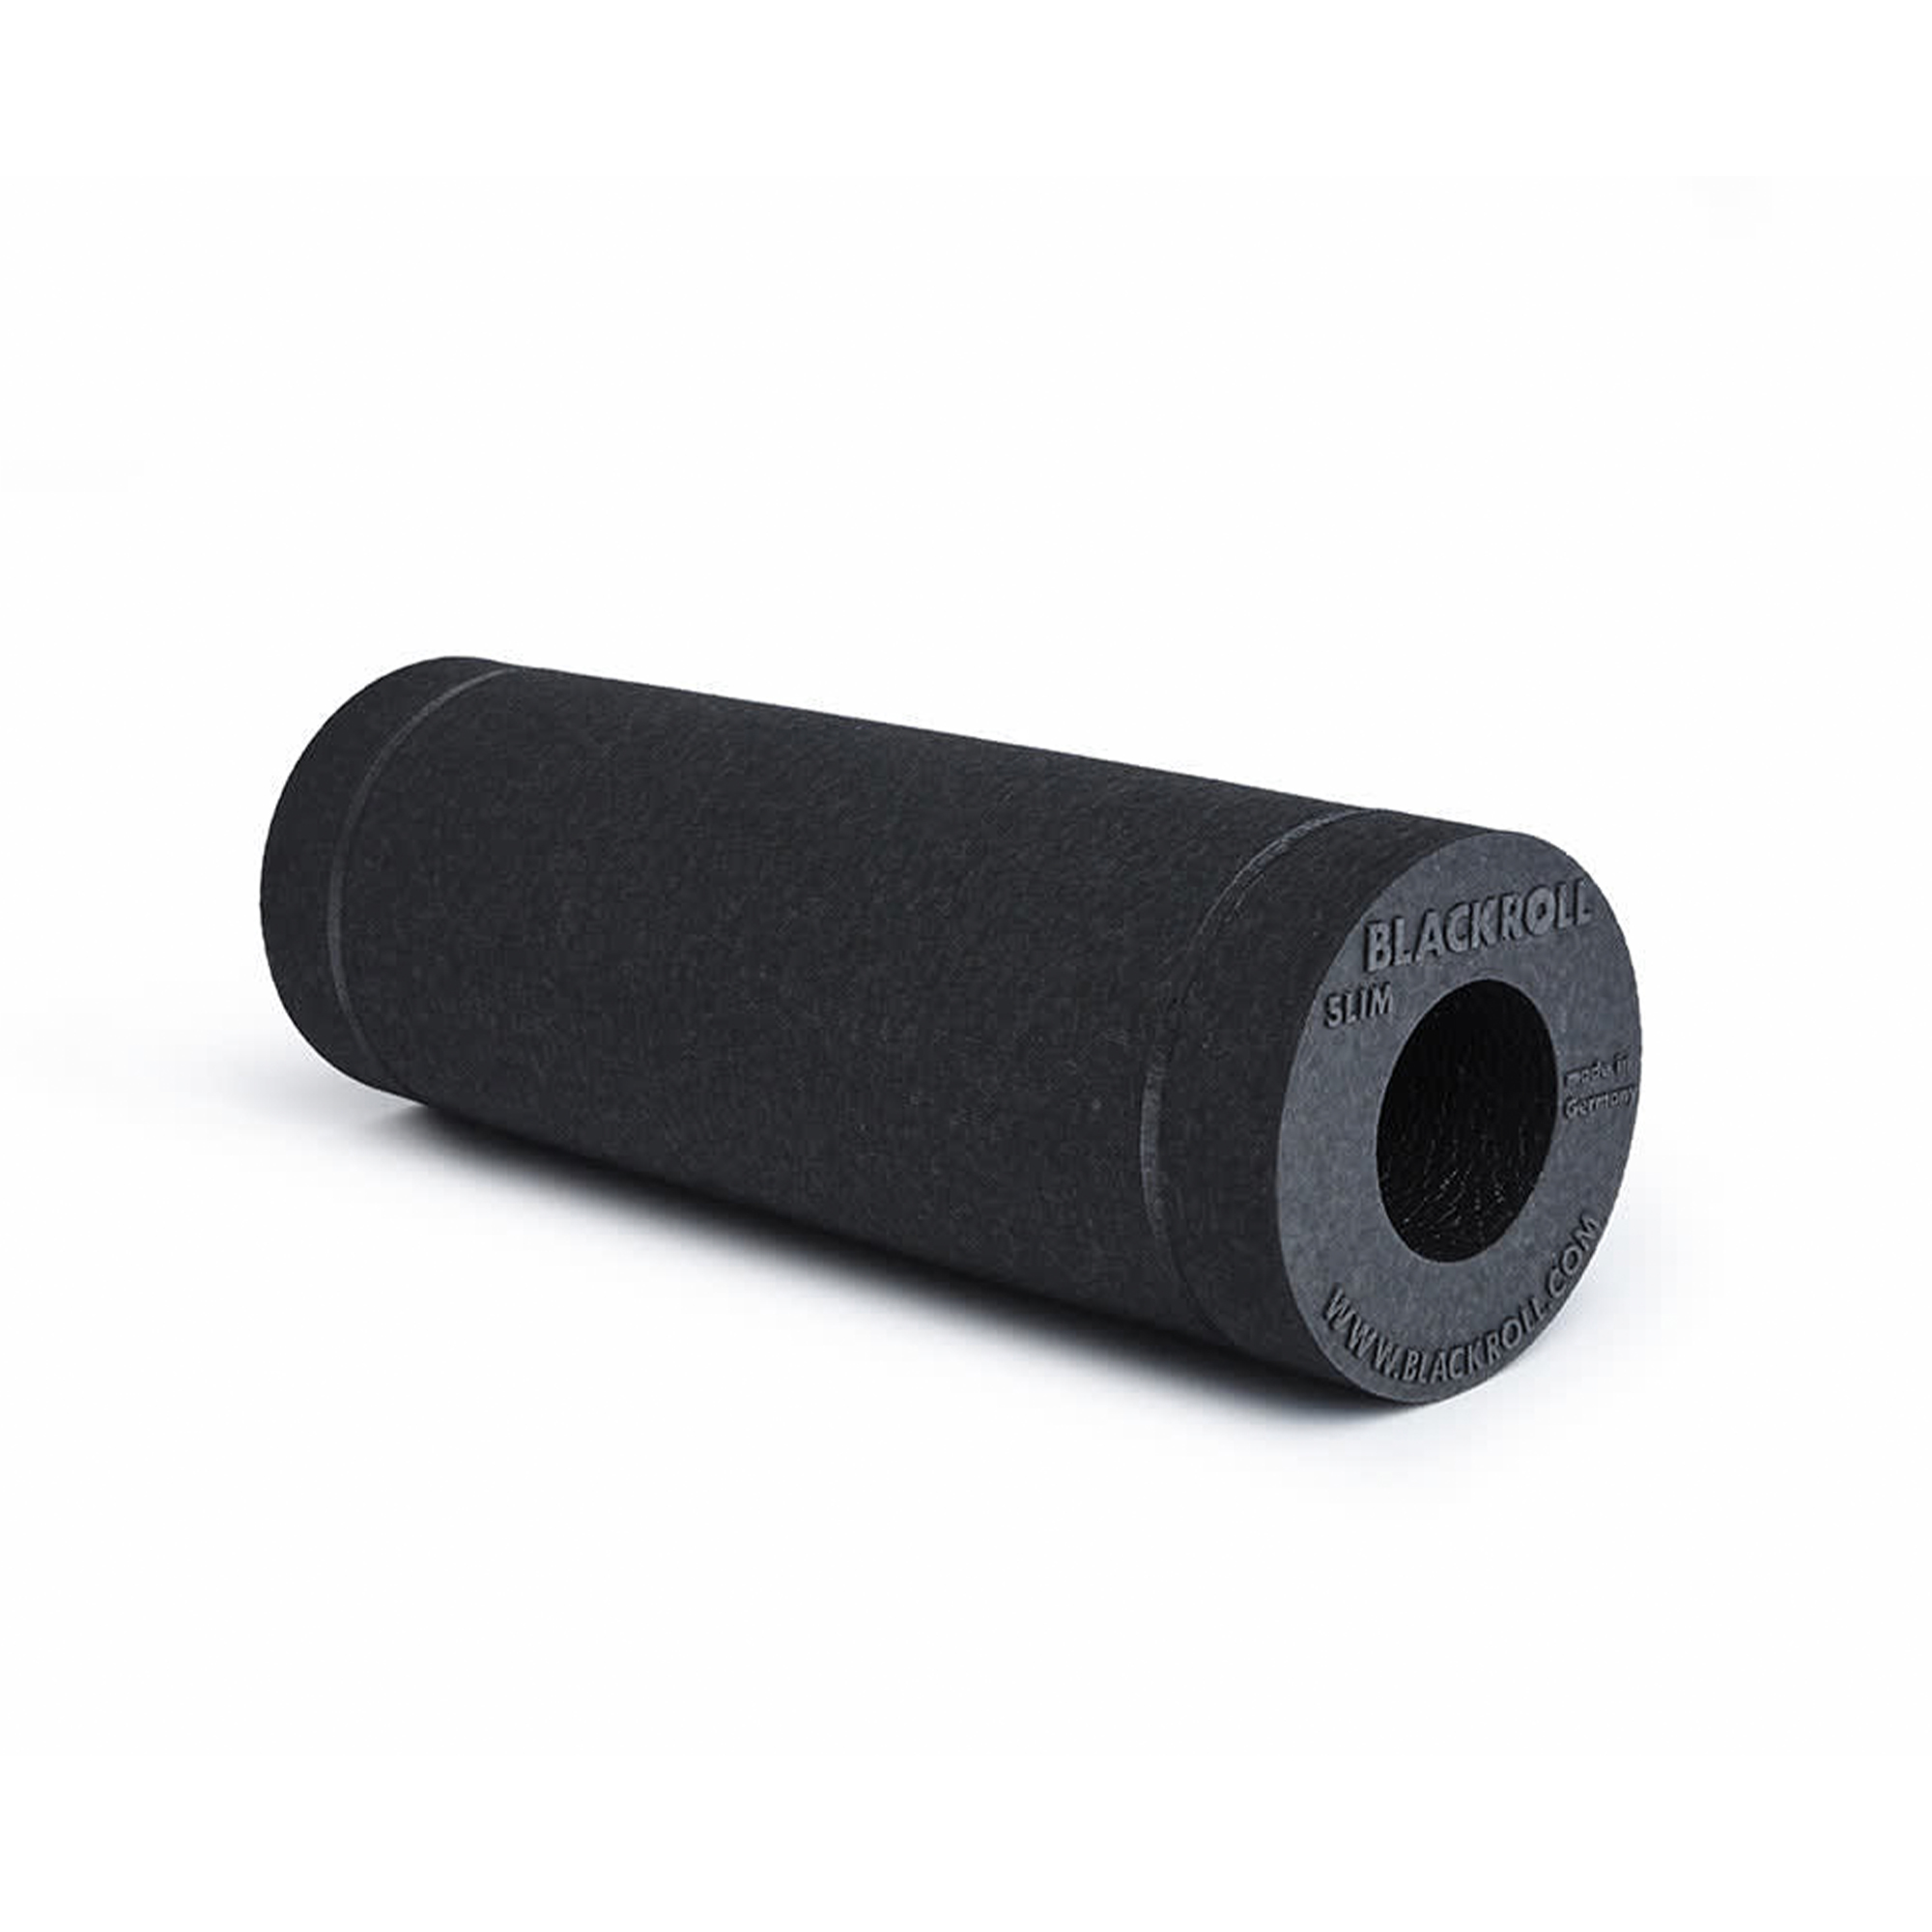 Blackroll Slim Foam Roller - længde: 30 cm - Ø10 cm thumbnail